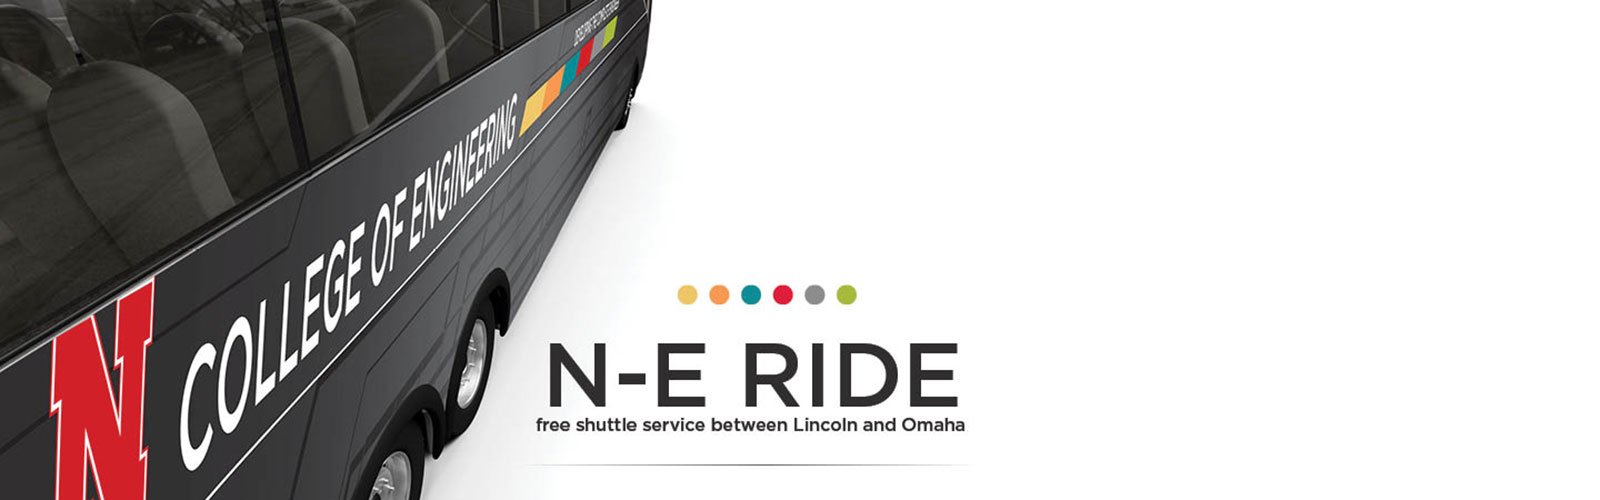 N-E Ride shuttles begin spring schedule today (Jan. 23).